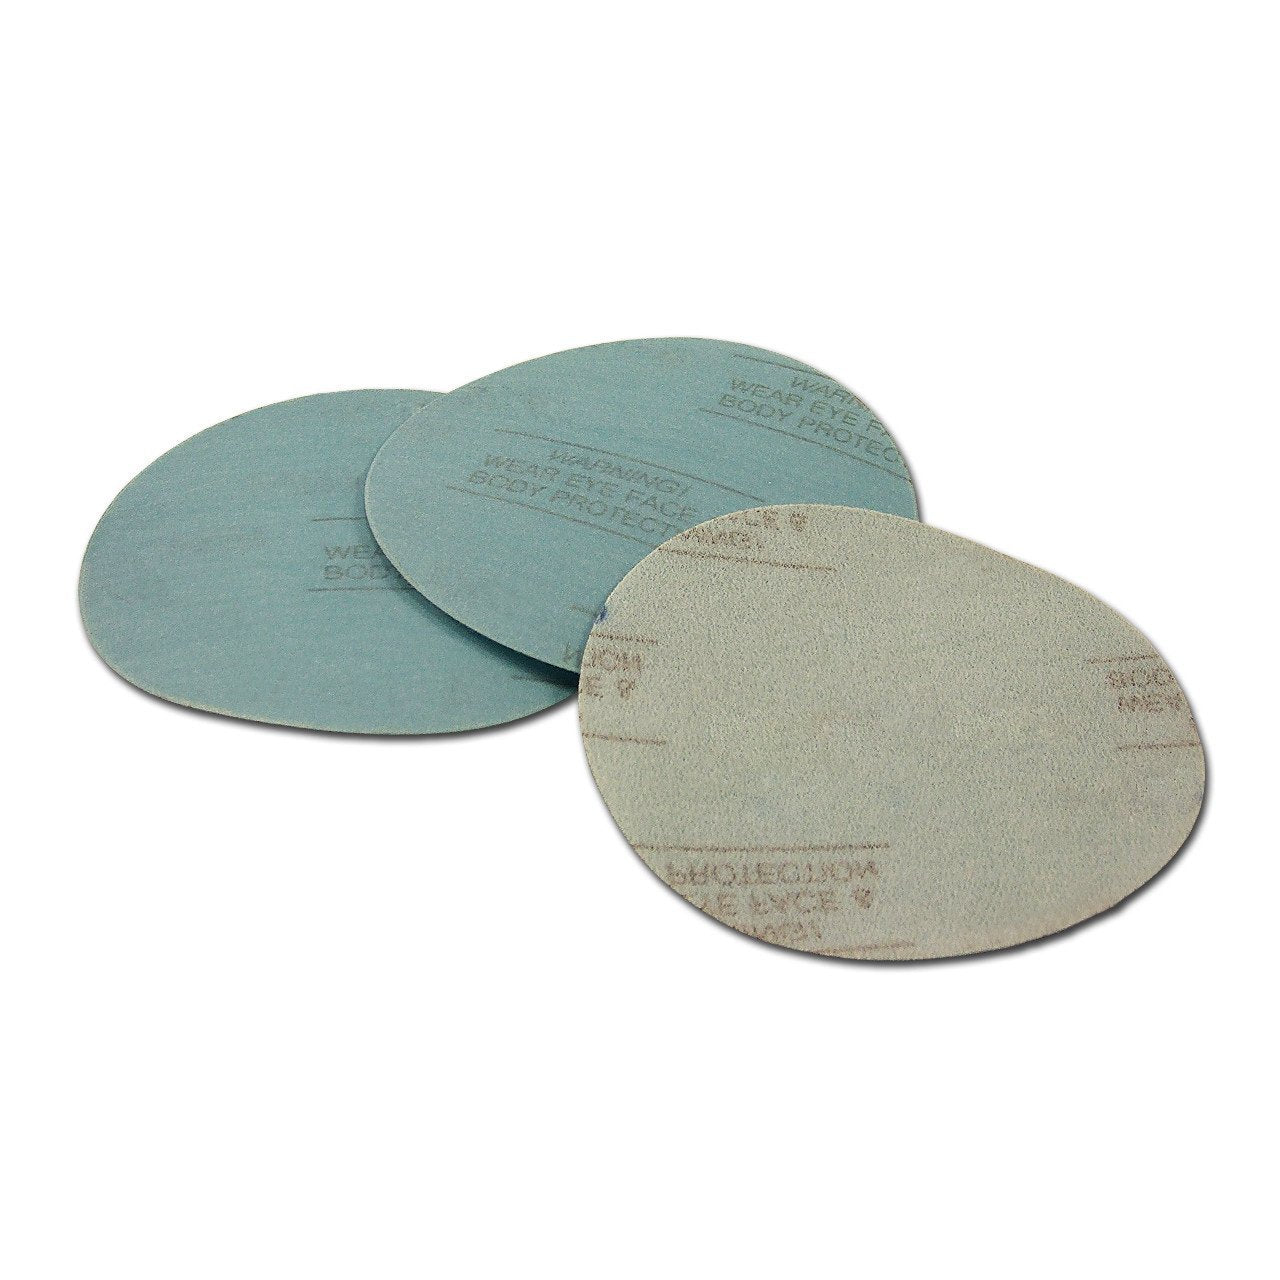 5 Inch Hook and Loop Blue Wet / Dry Sharpening Film Sanding Discs, 10 Pack - Red Label Abrasives